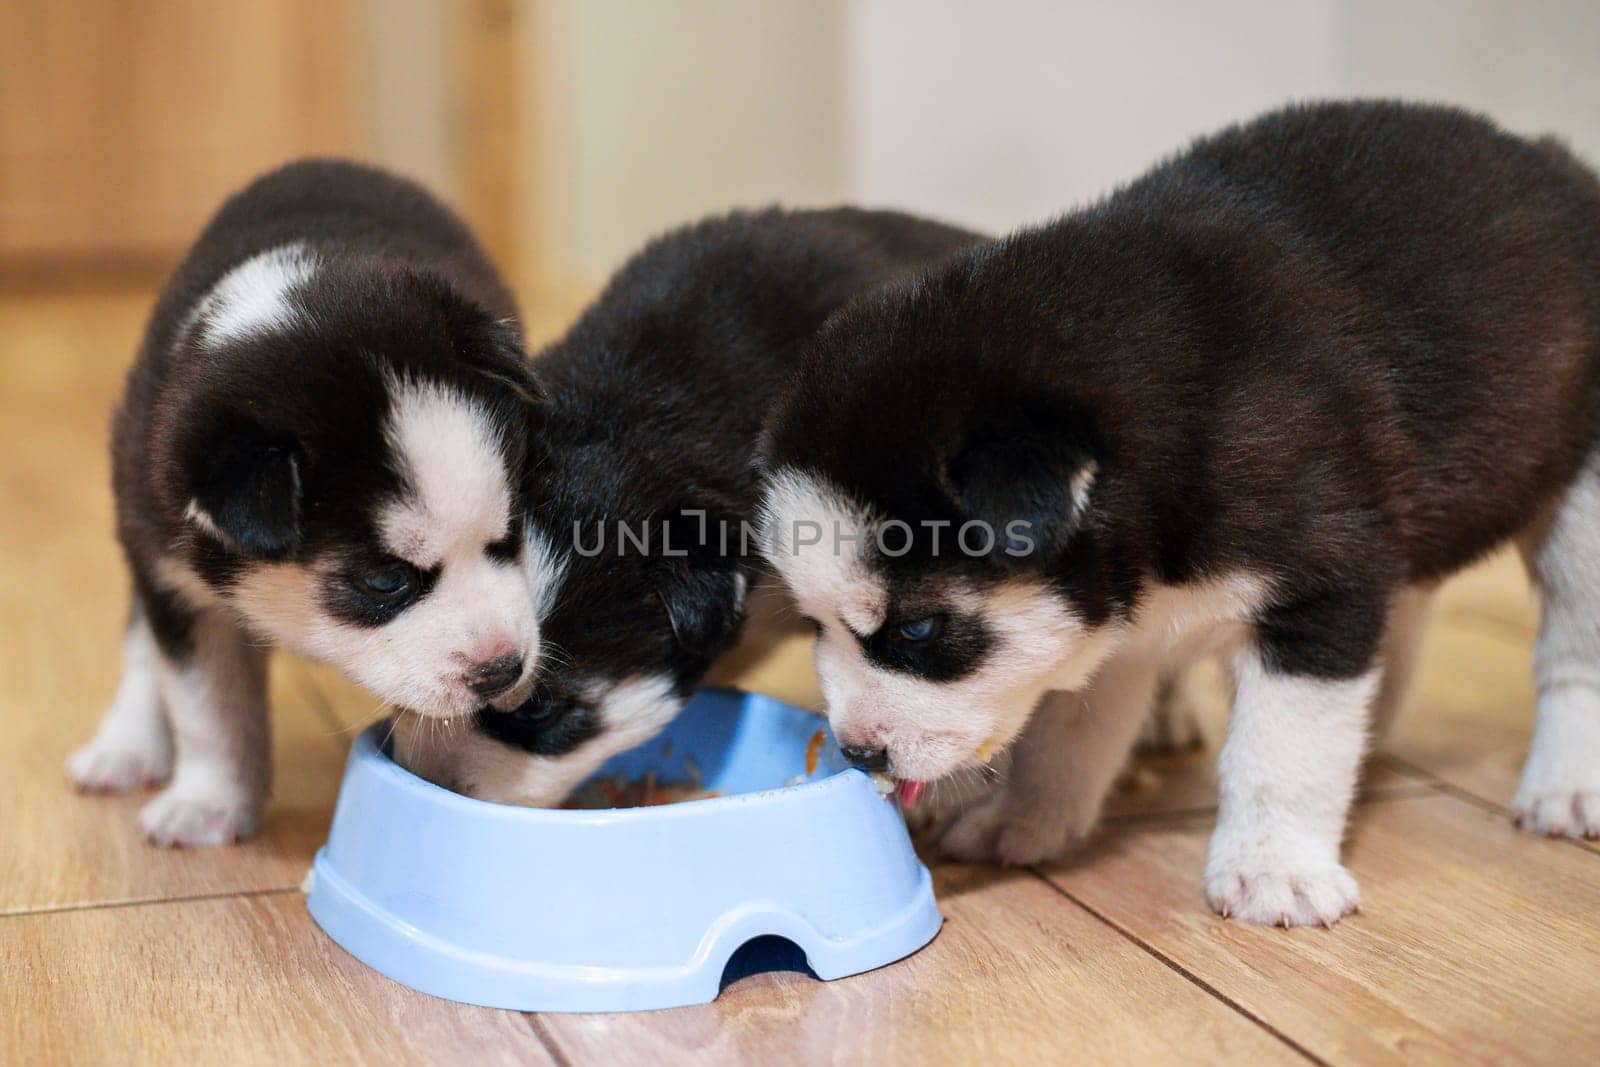 Cute siberian husky puppies eating from feeding bowl at home. Dog feeding.